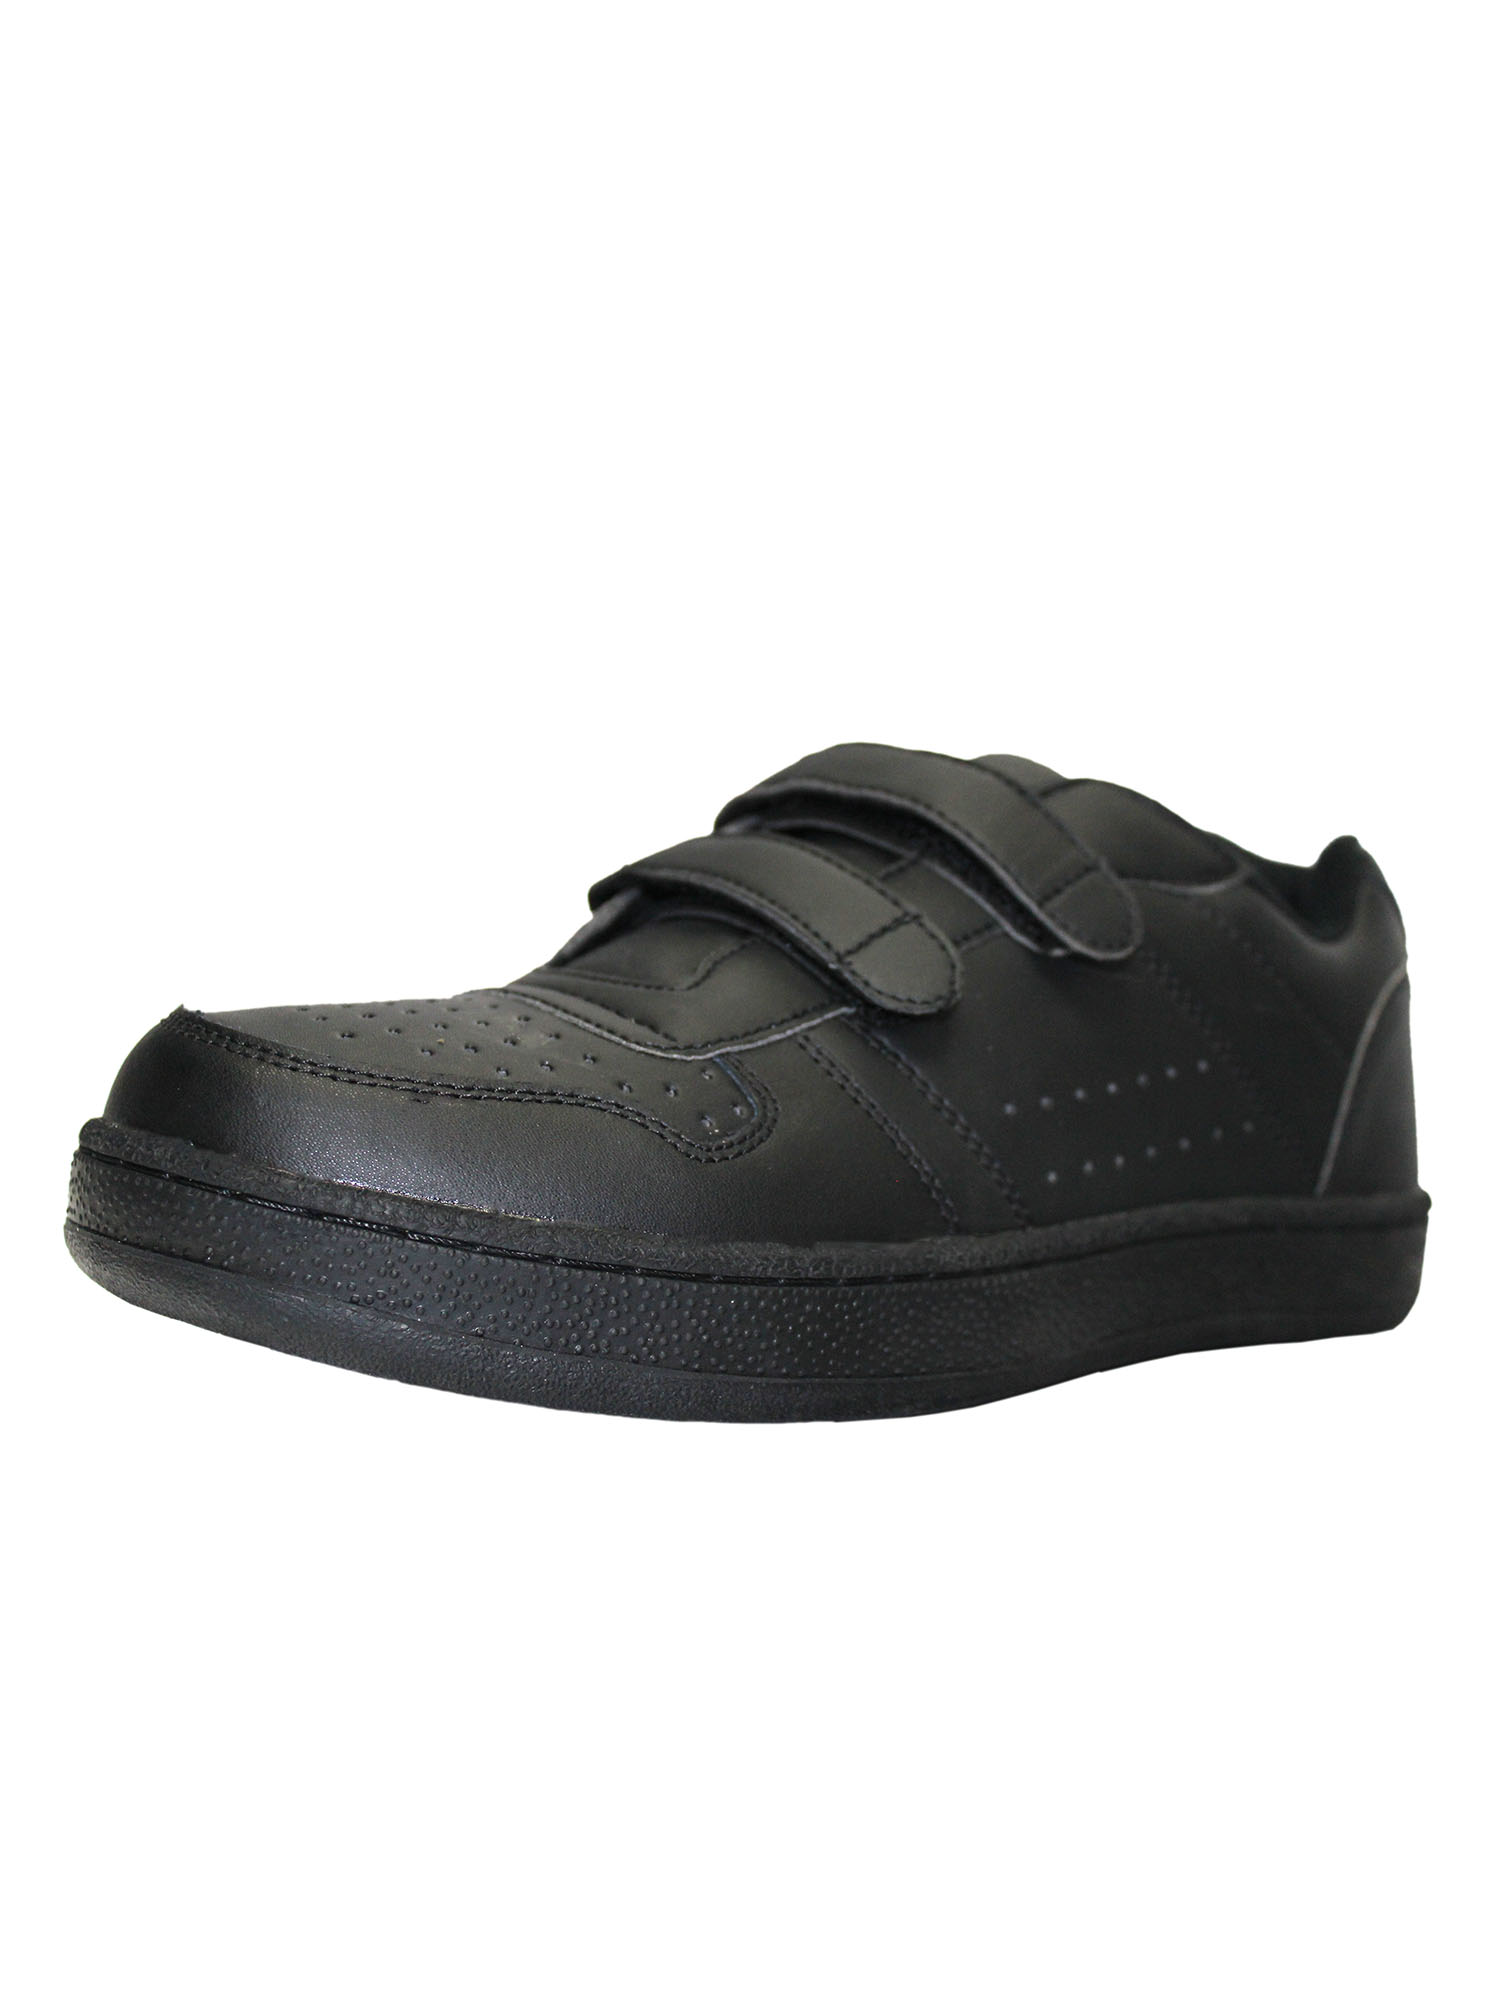 Tanleewa Men's Leather Strap Sneakers Lightweight Hook and Loop Walking Shoe Size 15 Adult Male - image 1 of 4